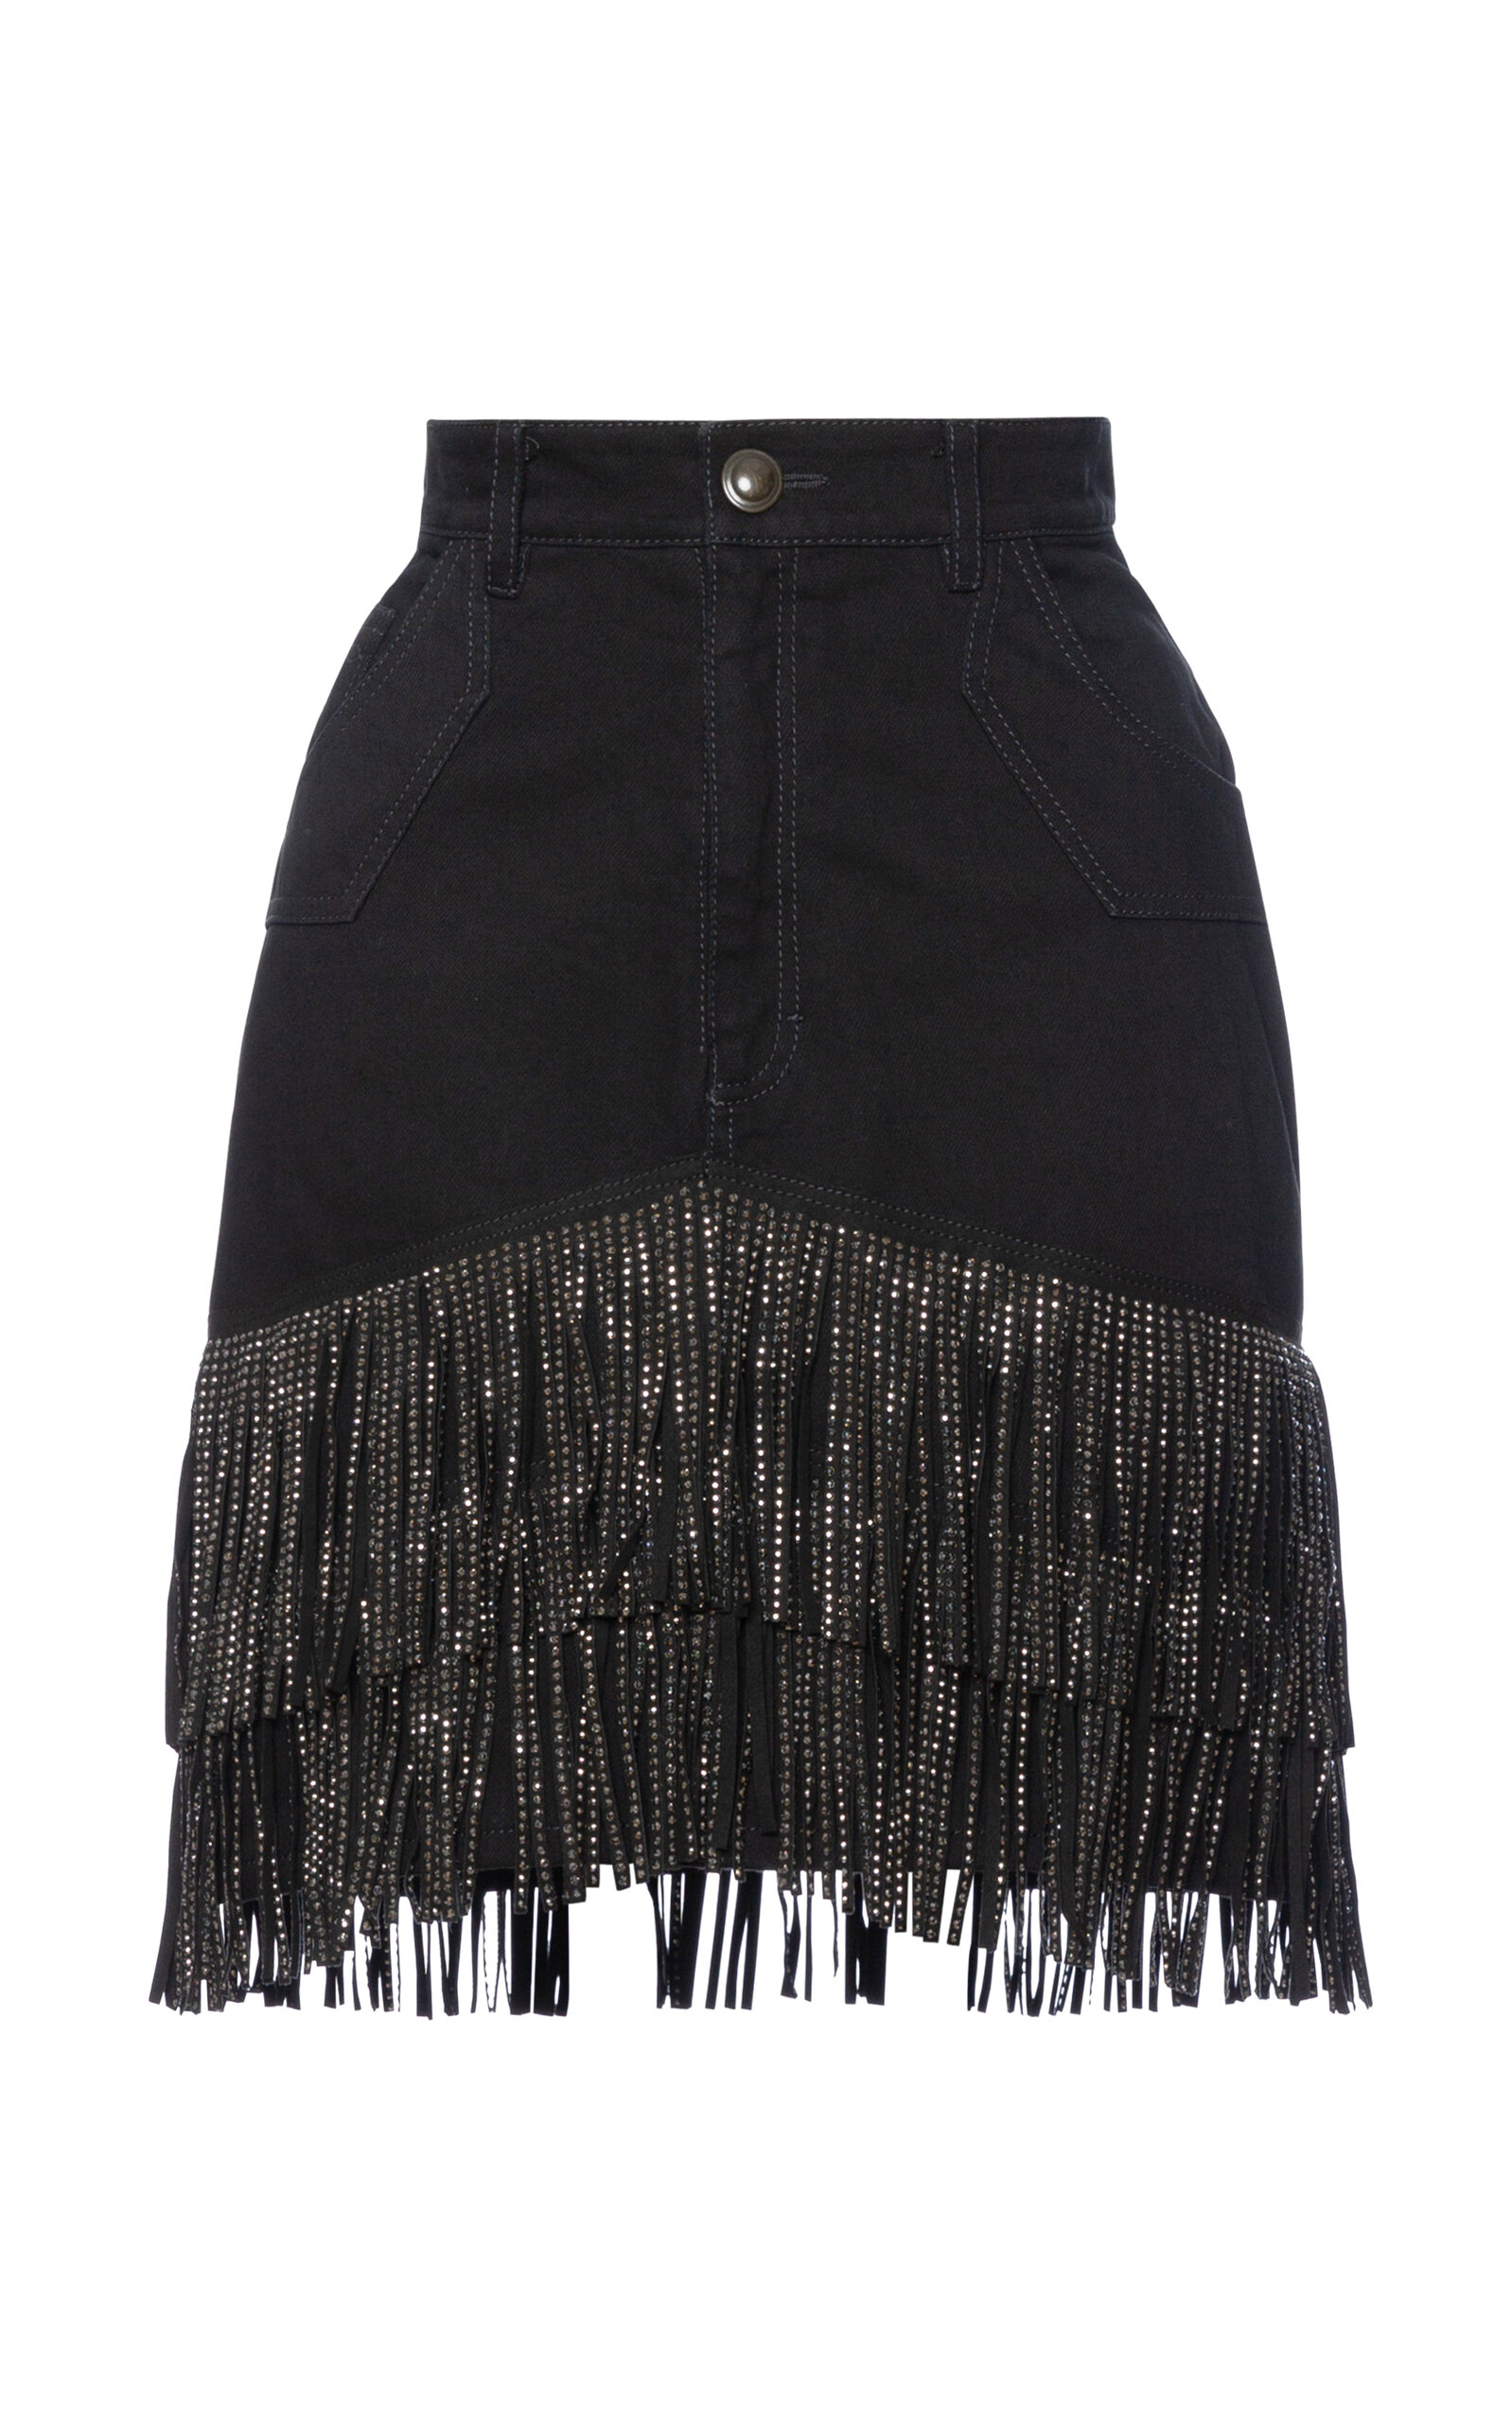 Lena Hoschek Almost Famous Cotton Mini Skirt In Black